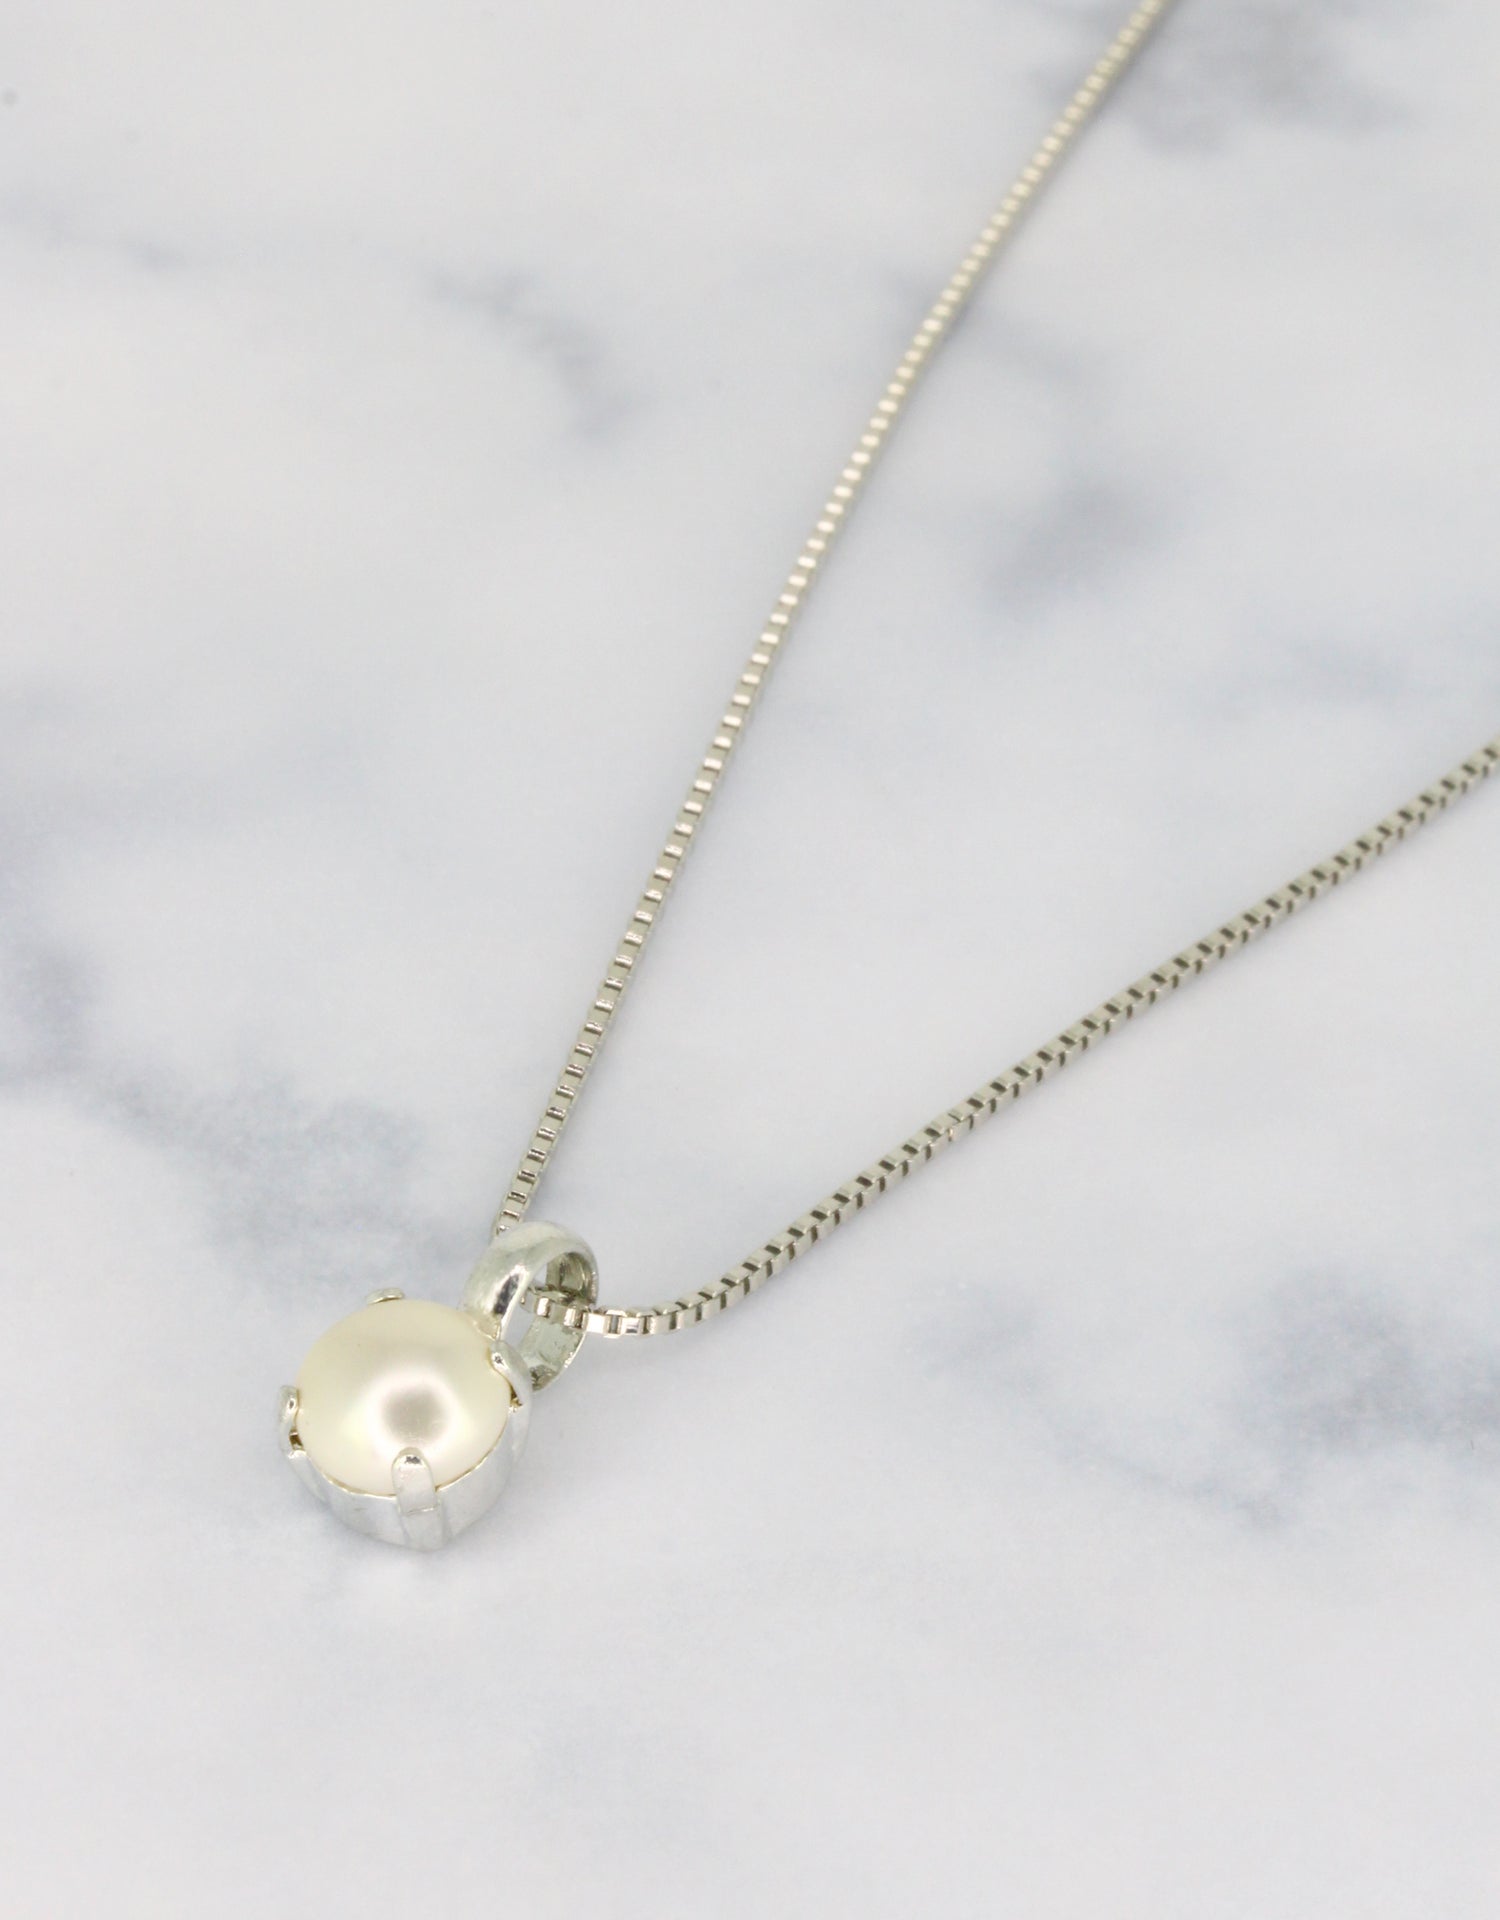 White Pearl/ Silver